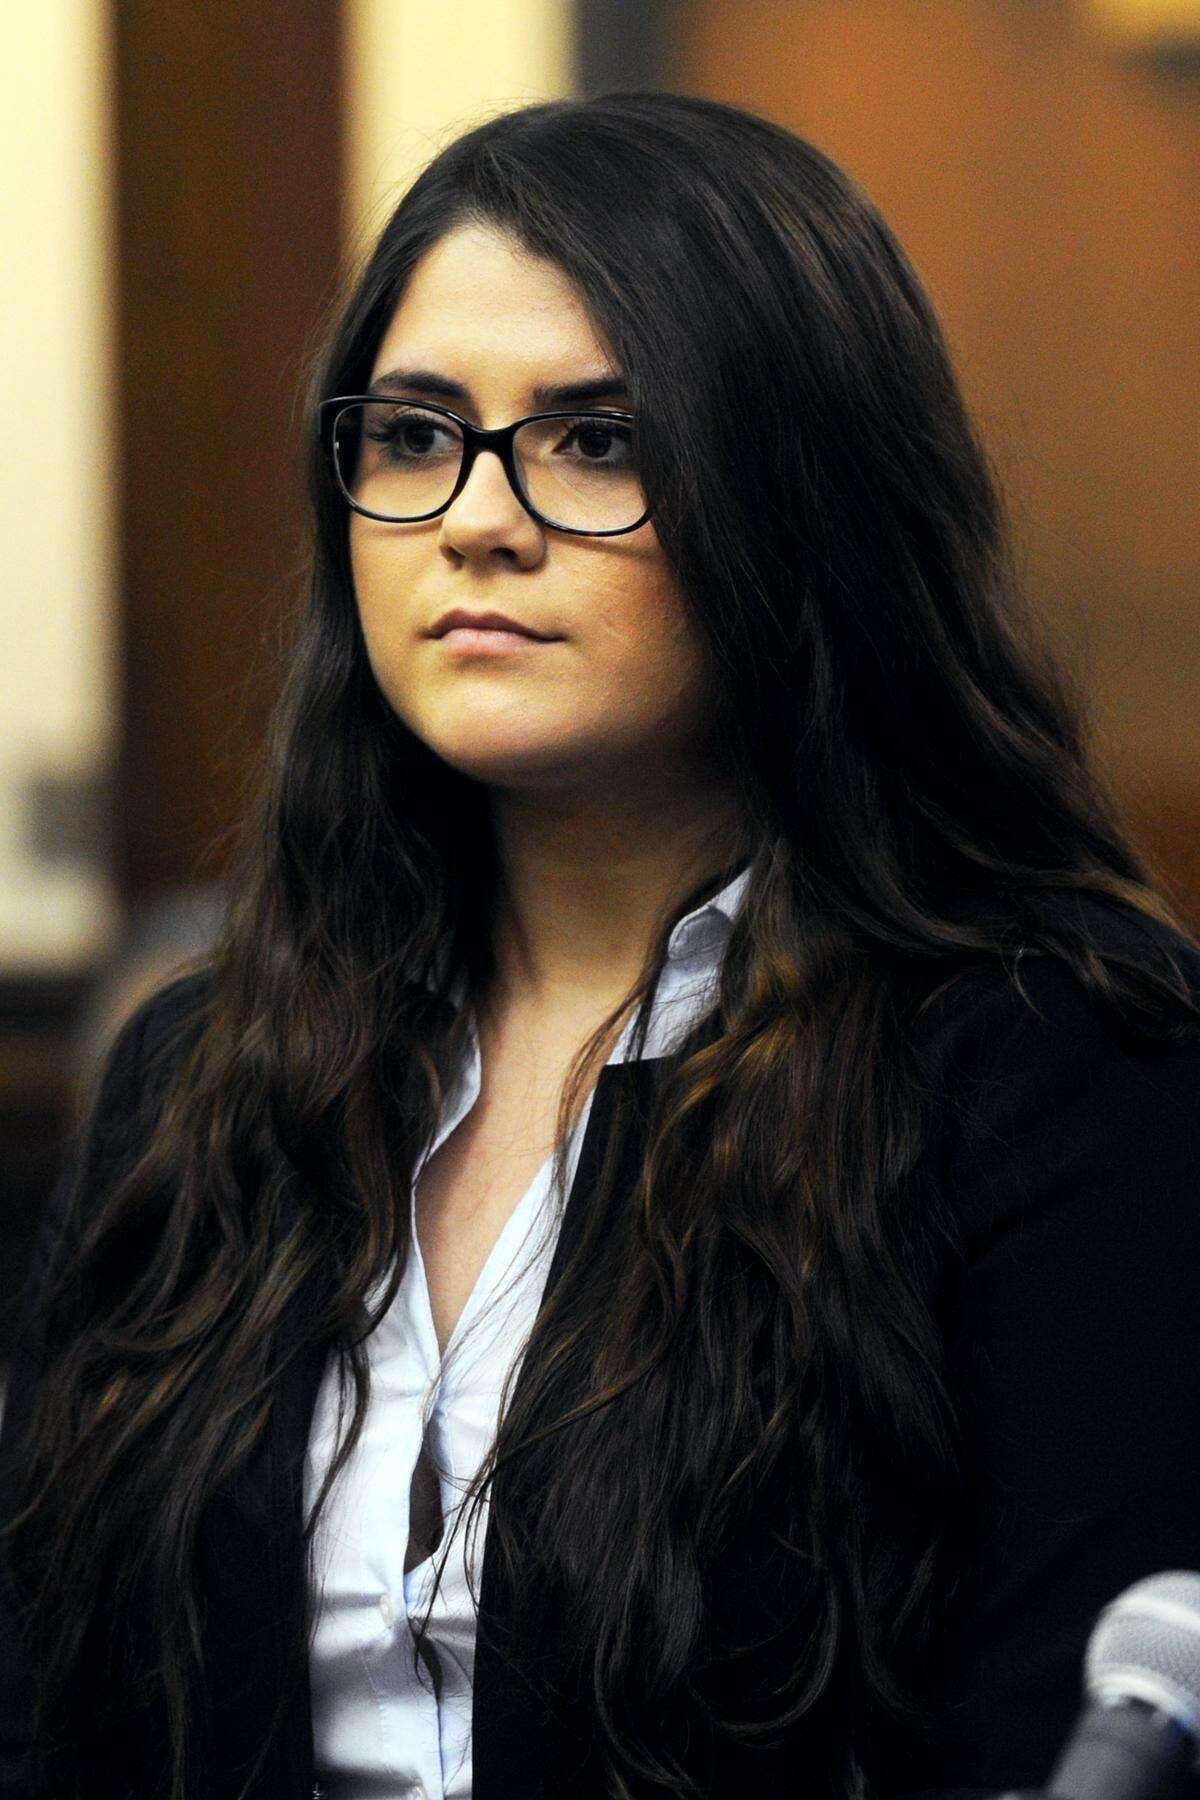 Nikki Yovino is arraigned in Bridgeport Superior Court, in Bridgeport, Conn. March 3, 2017.